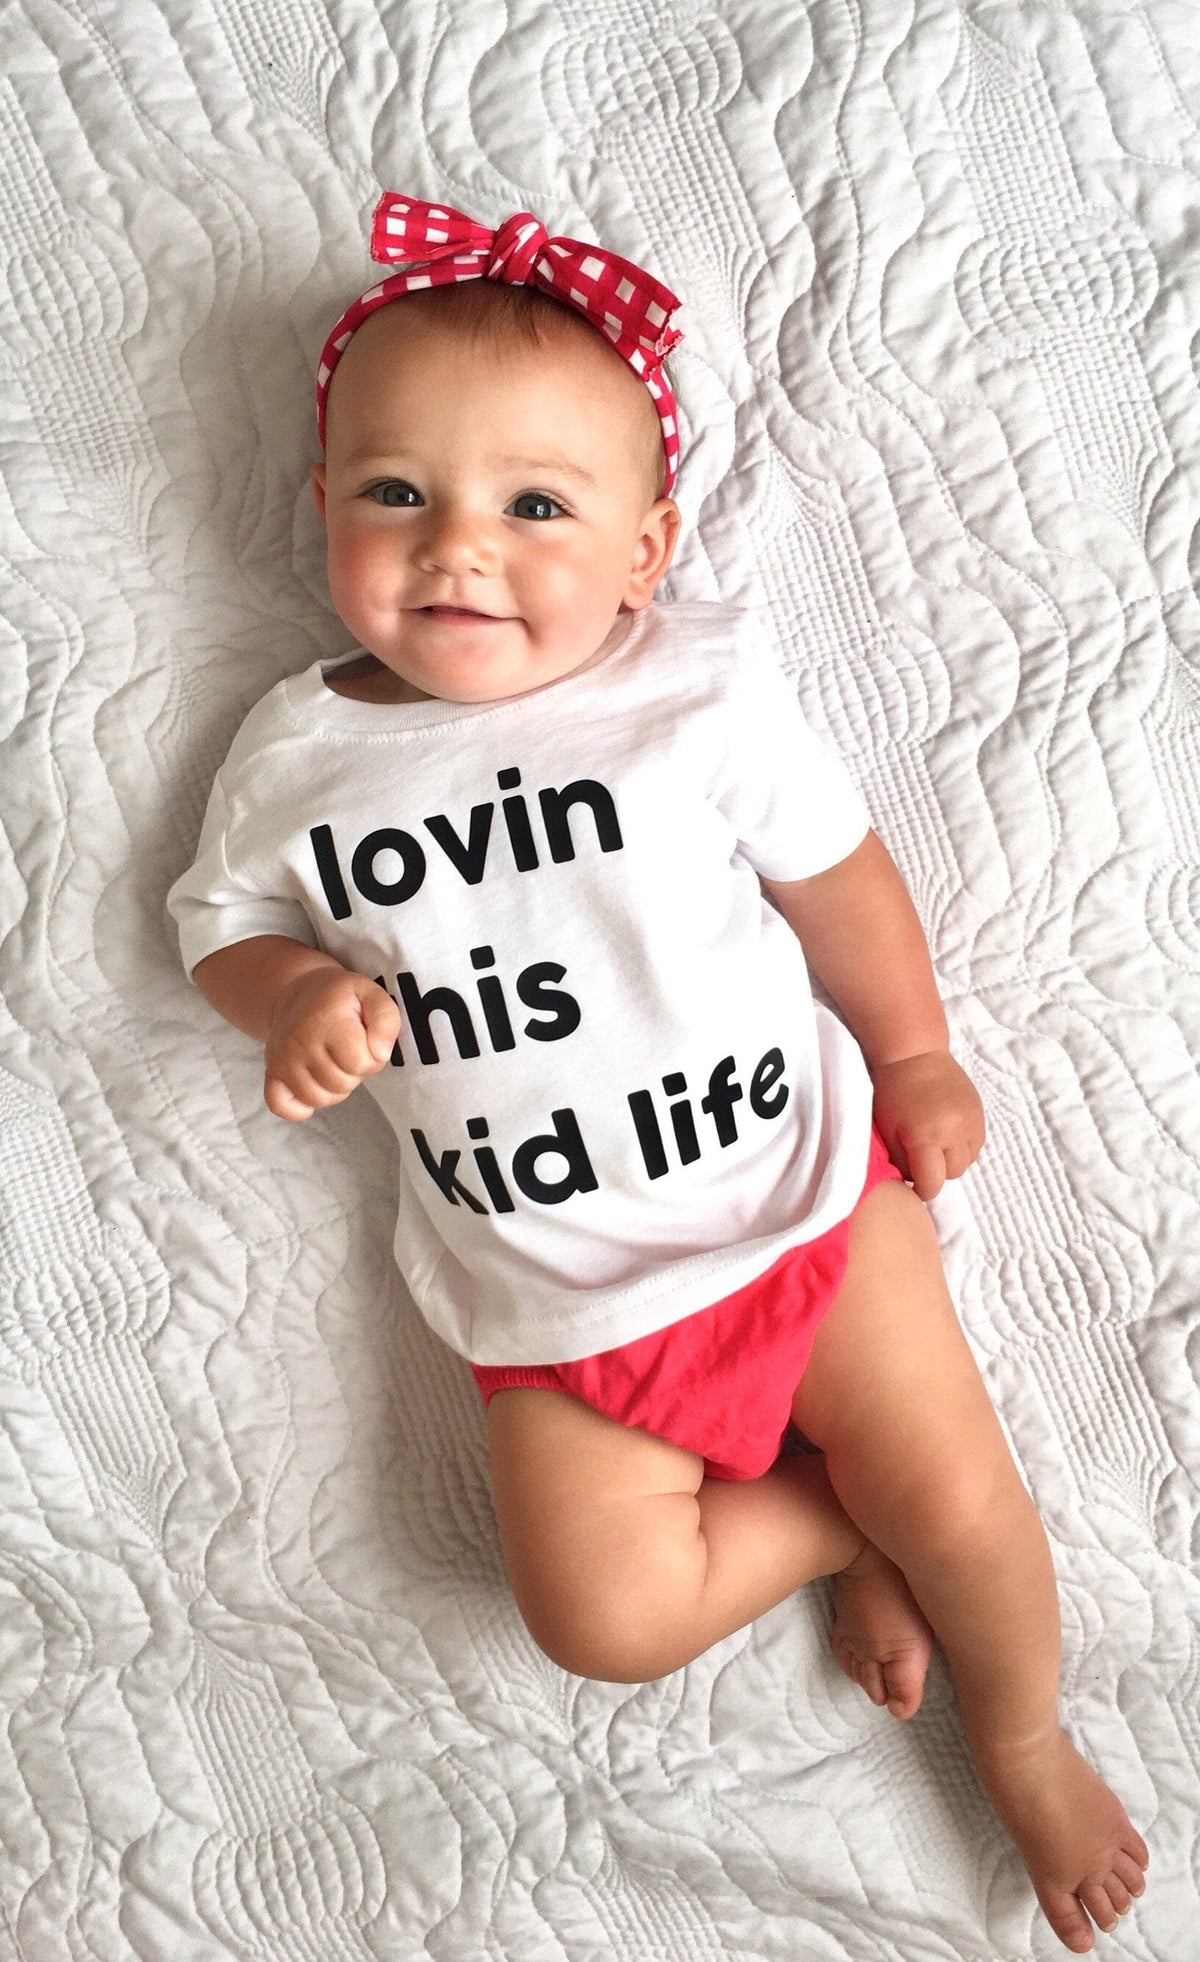 Lovin This Kid Life • Kid life shirt - 